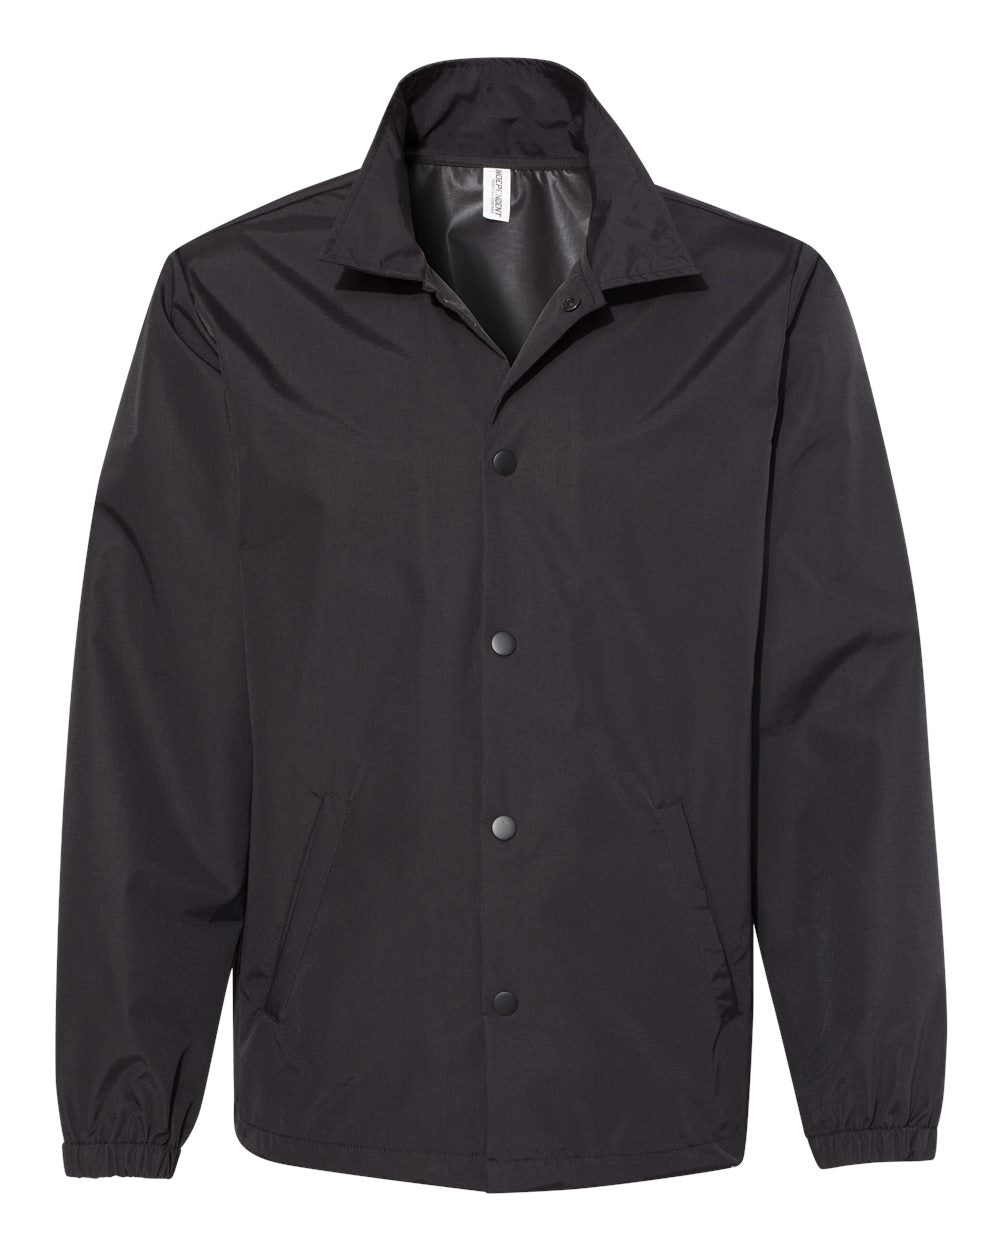 independent trading co windbreaker coachs jacket black black